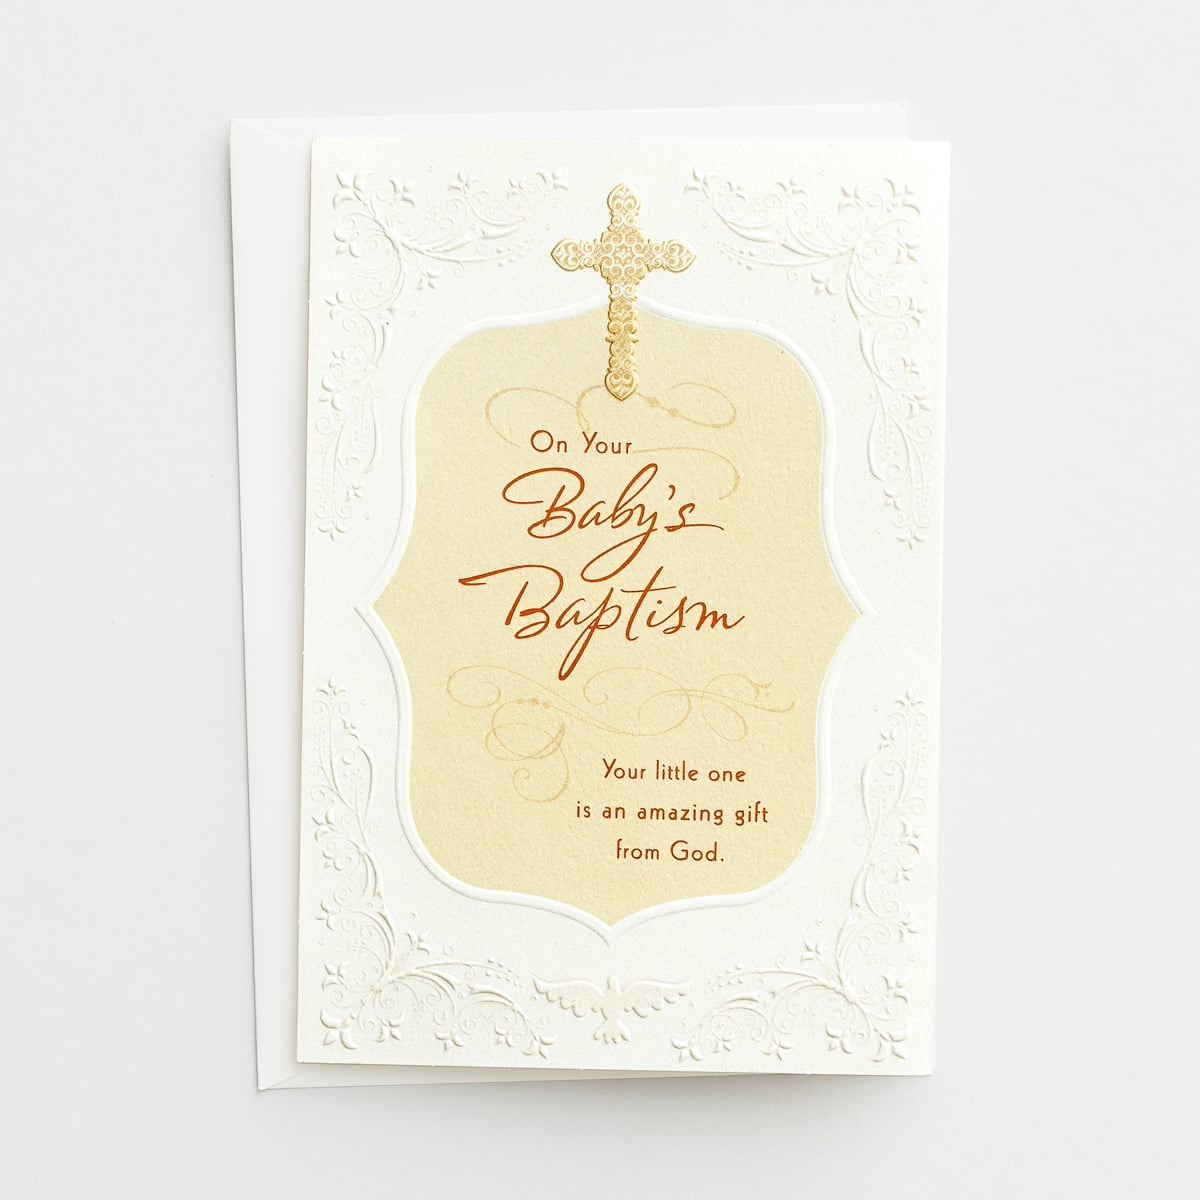 DaySpring, Baby Baptism, An Amazing Gift, 6 Premium Cards